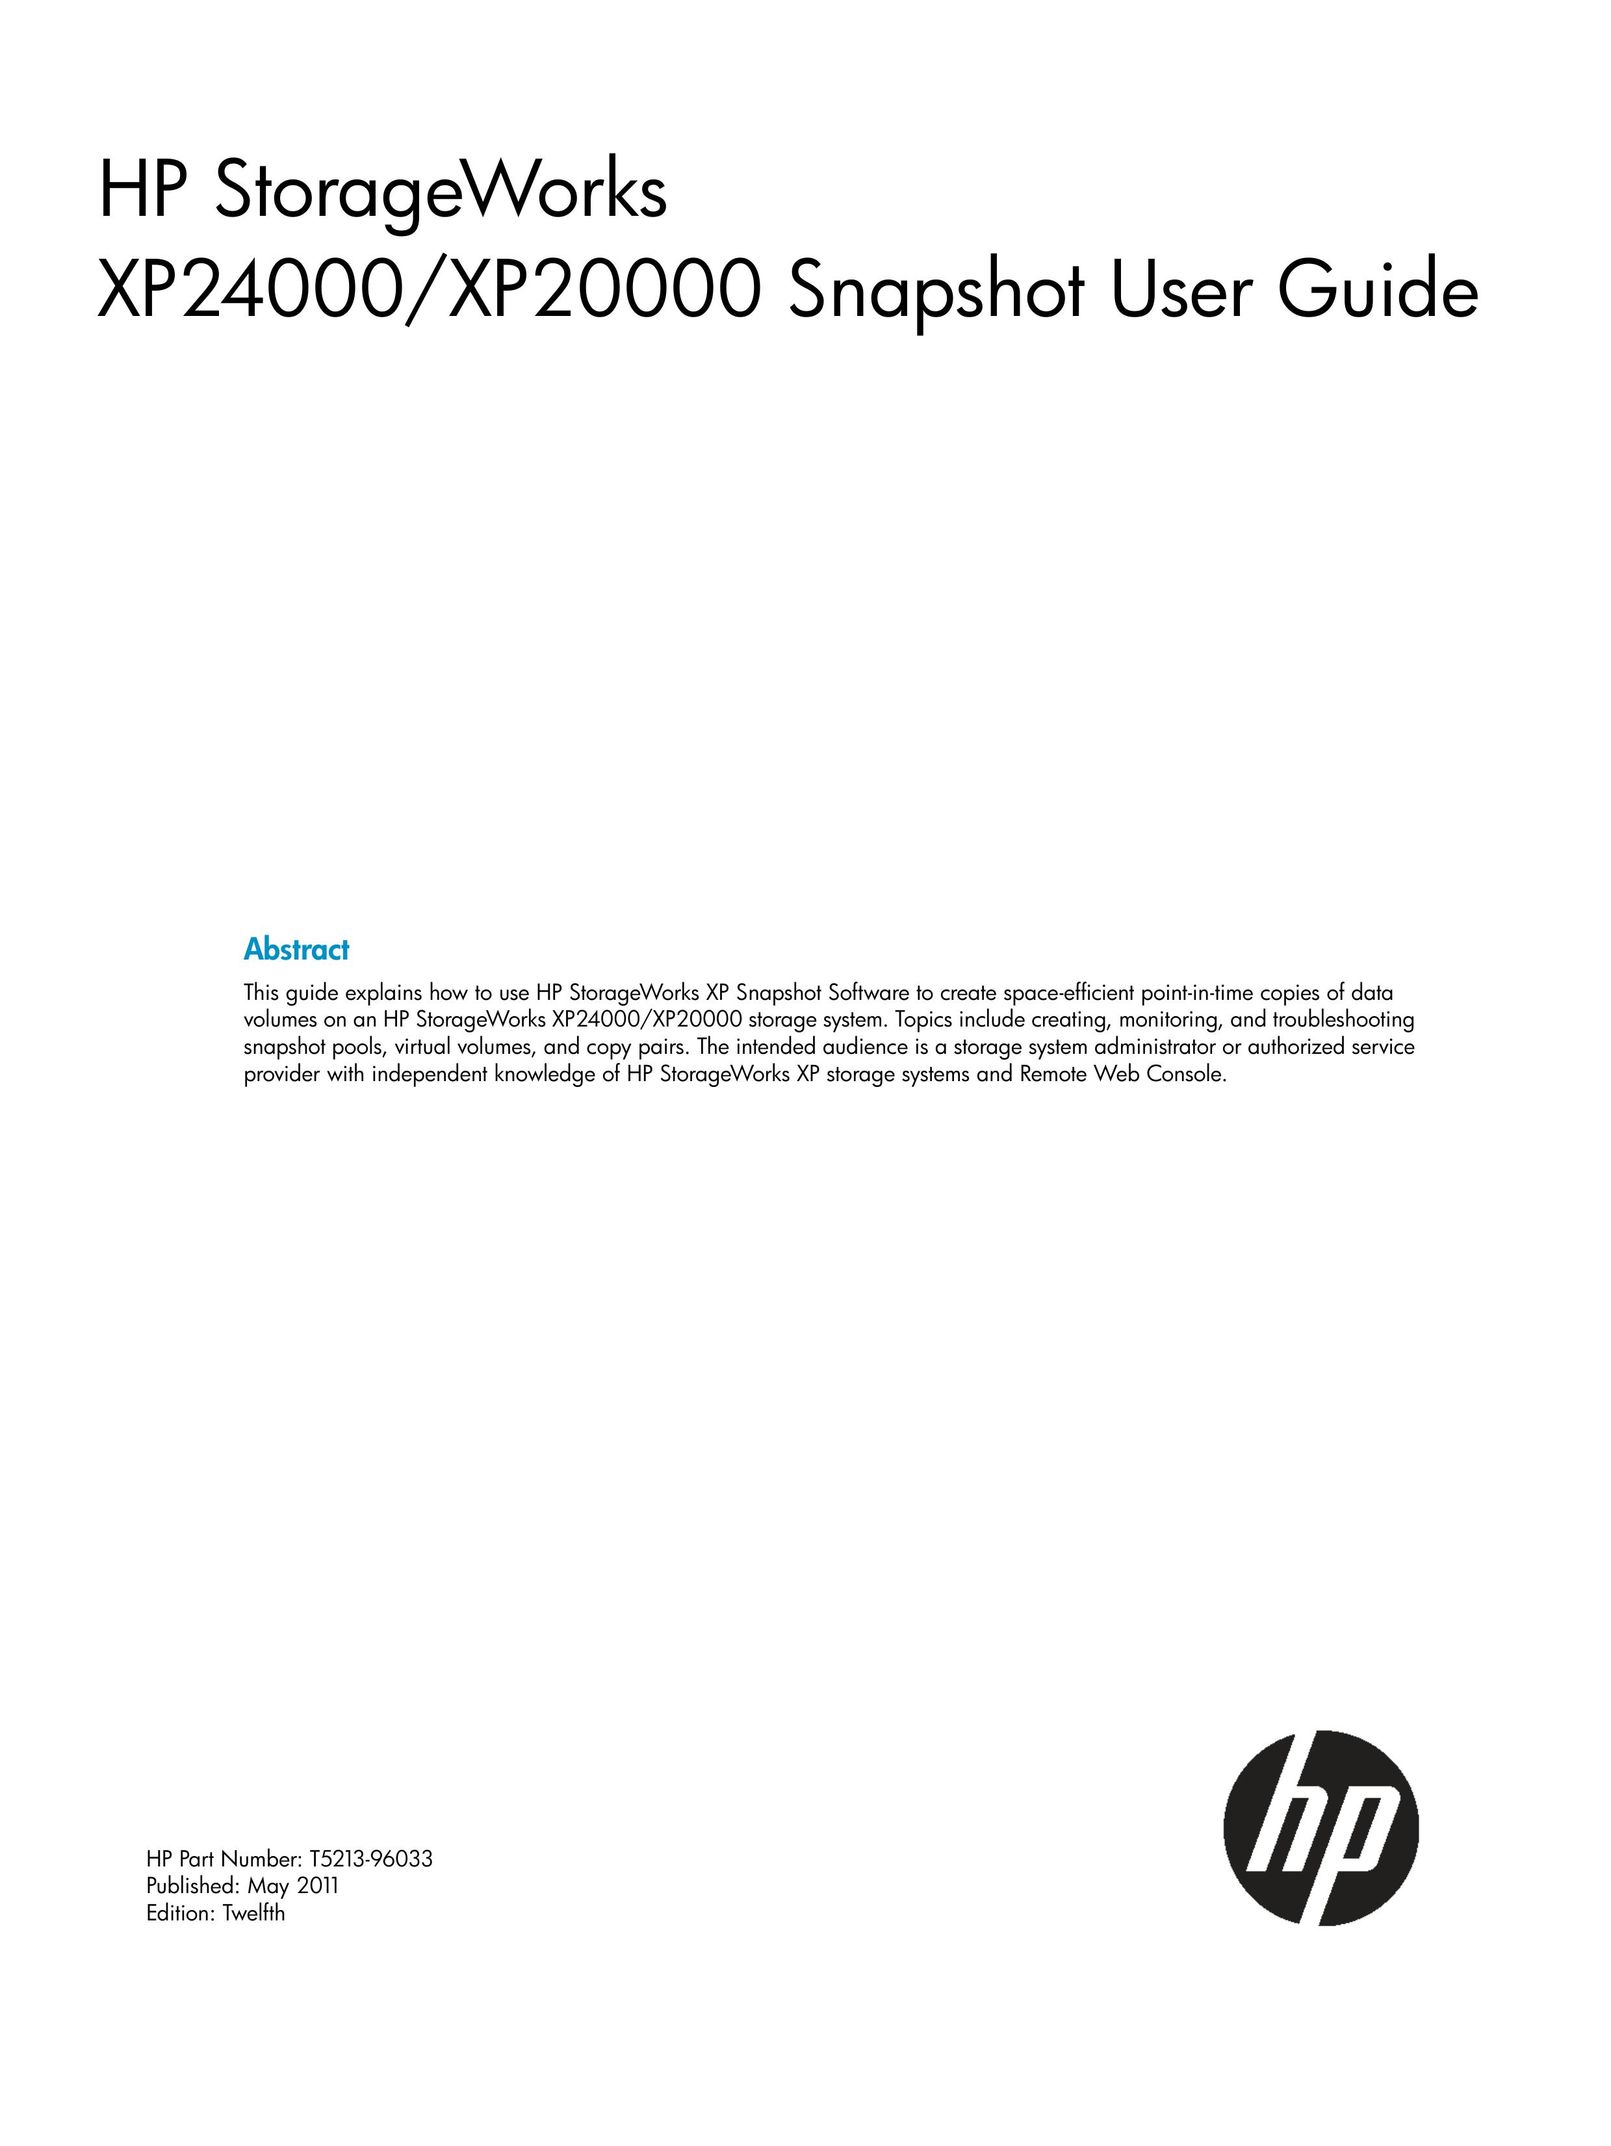 HP (Hewlett-Packard) XP24000 Portable Media Storage User Manual